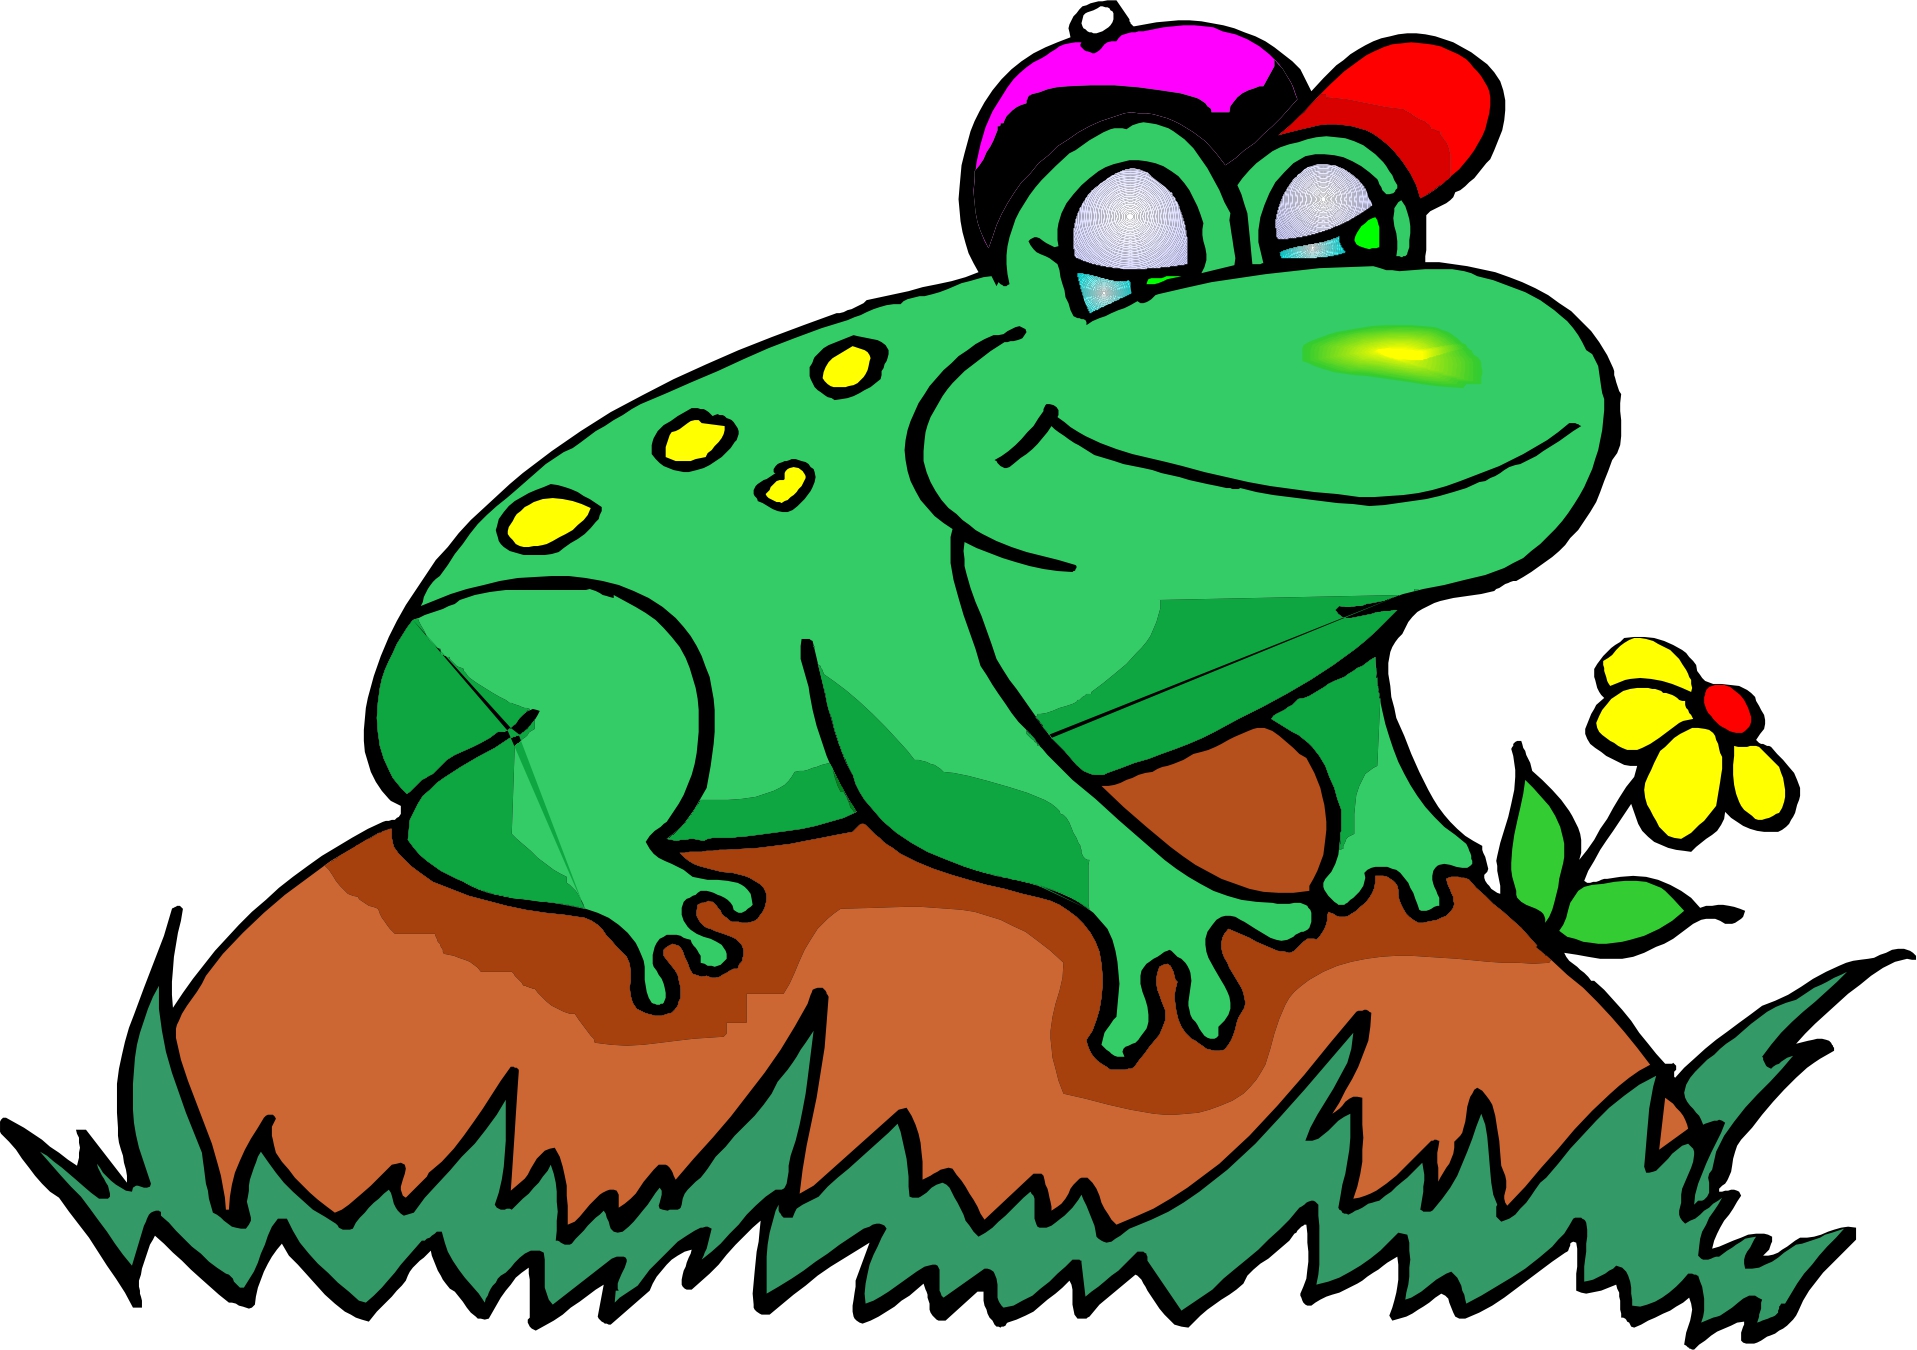 Frog Cartoons - ClipArt Best